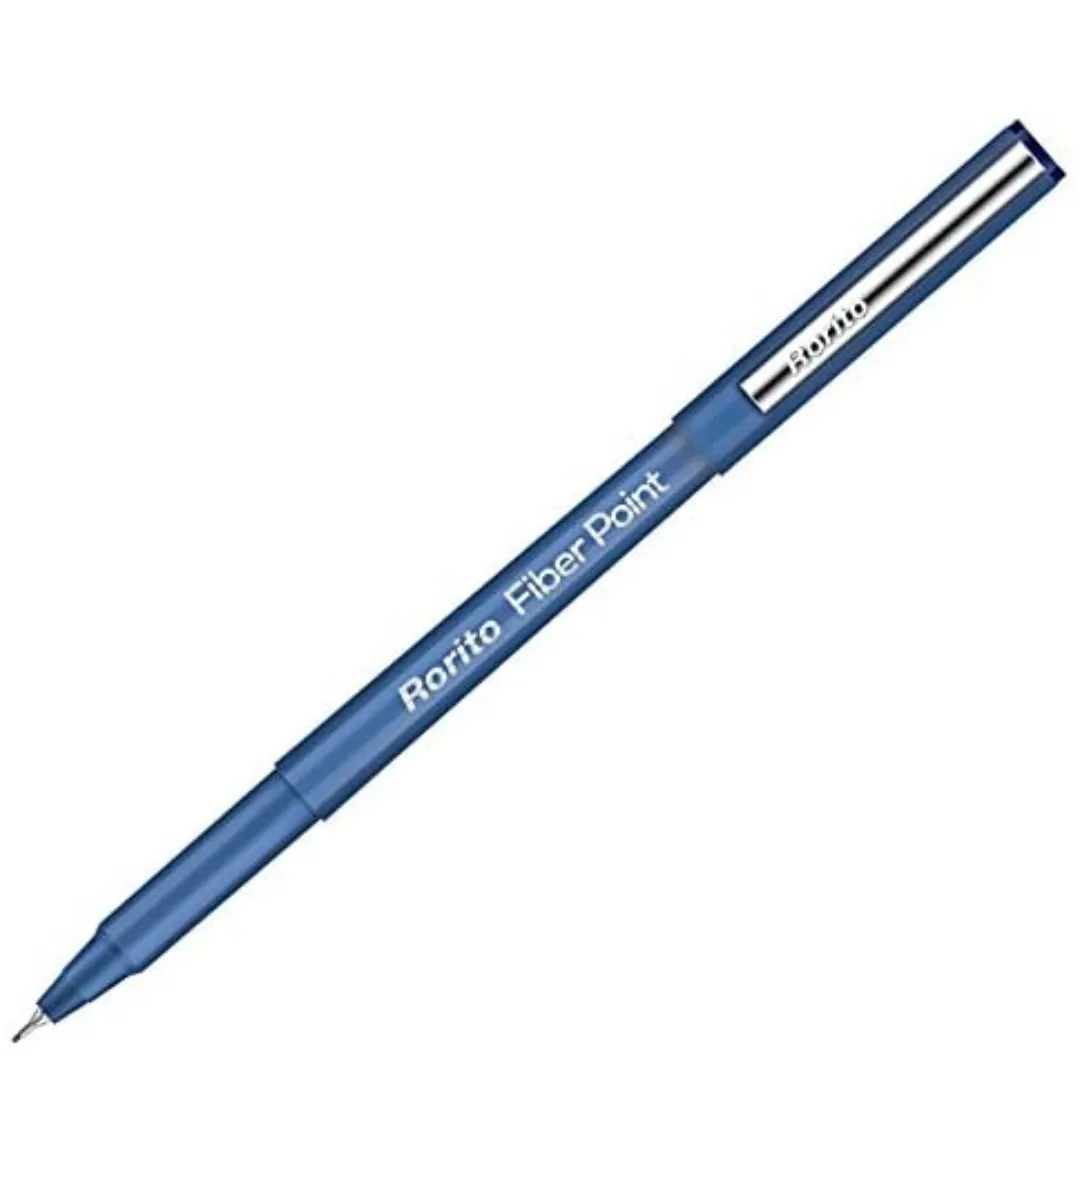 Rorito Fiber Point Blue Pilot Pen Pack of 10